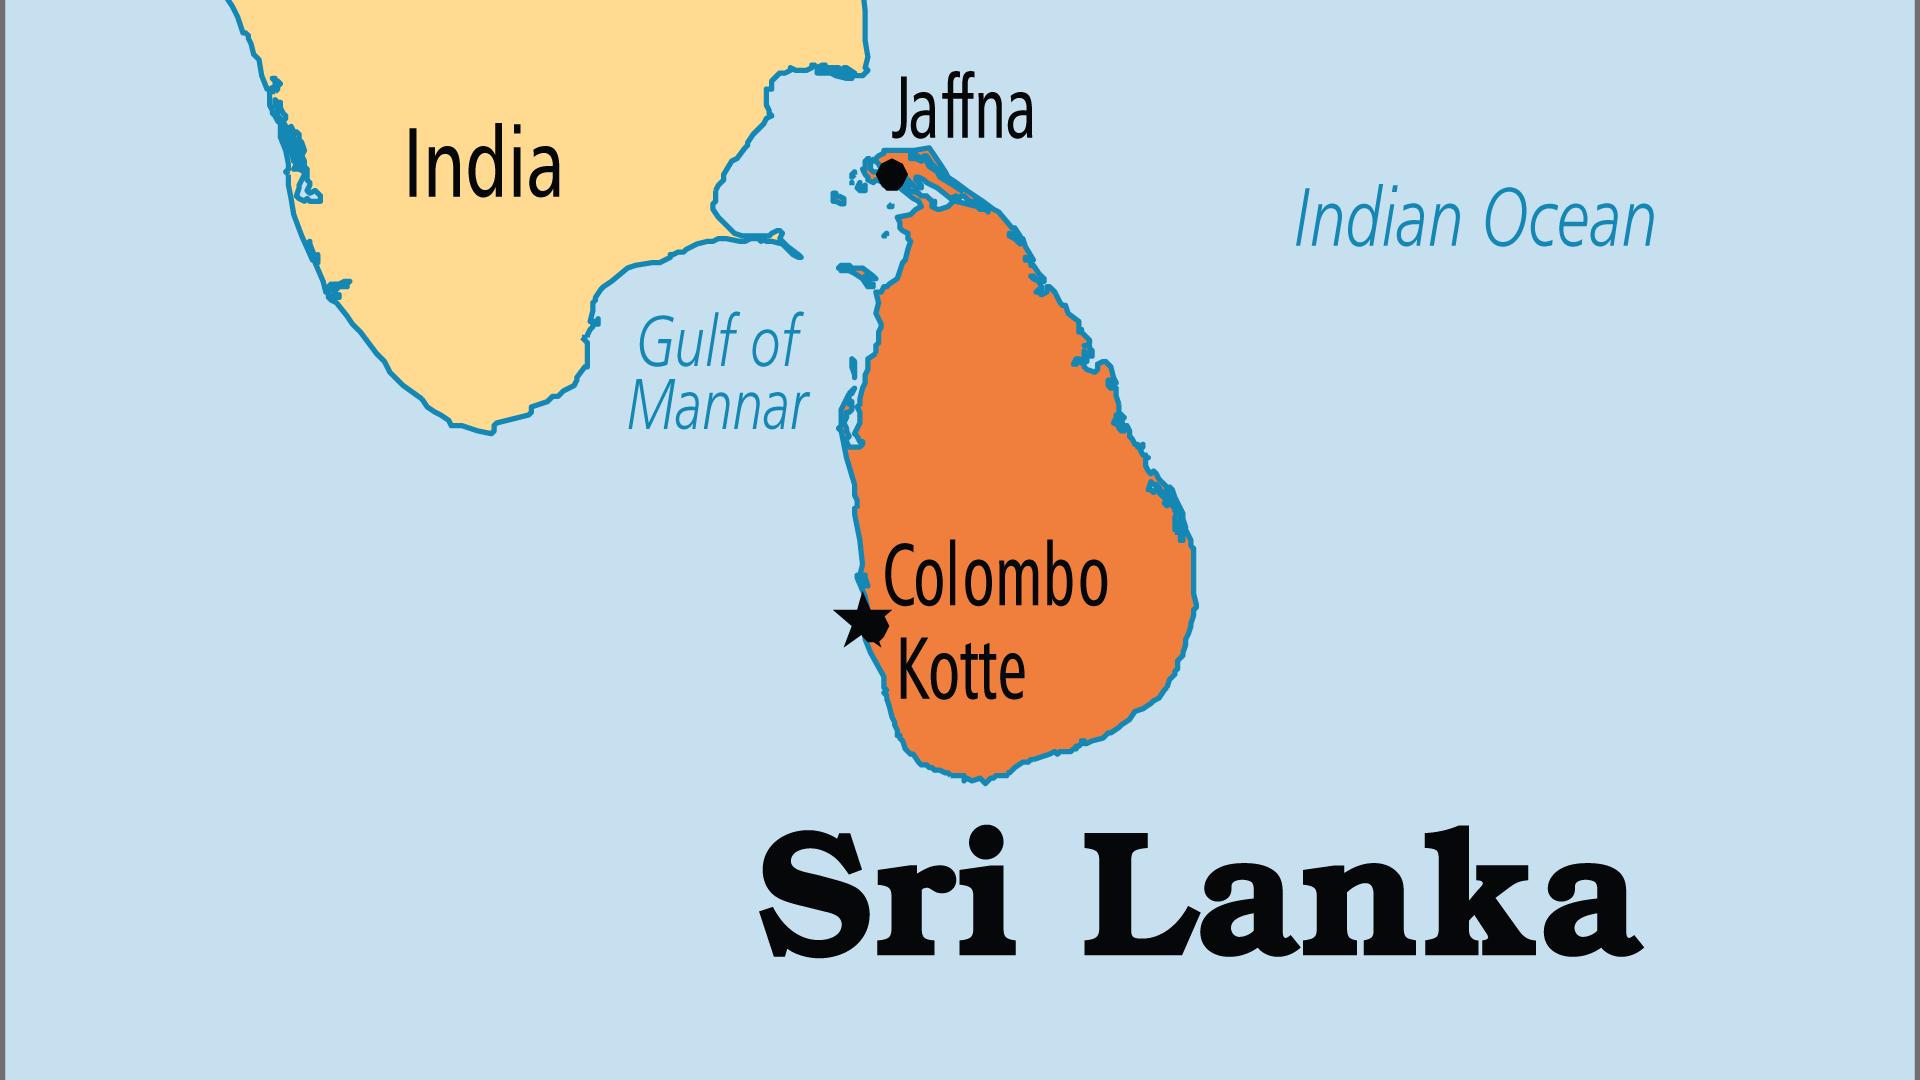 Sri Lanka (Operation World)